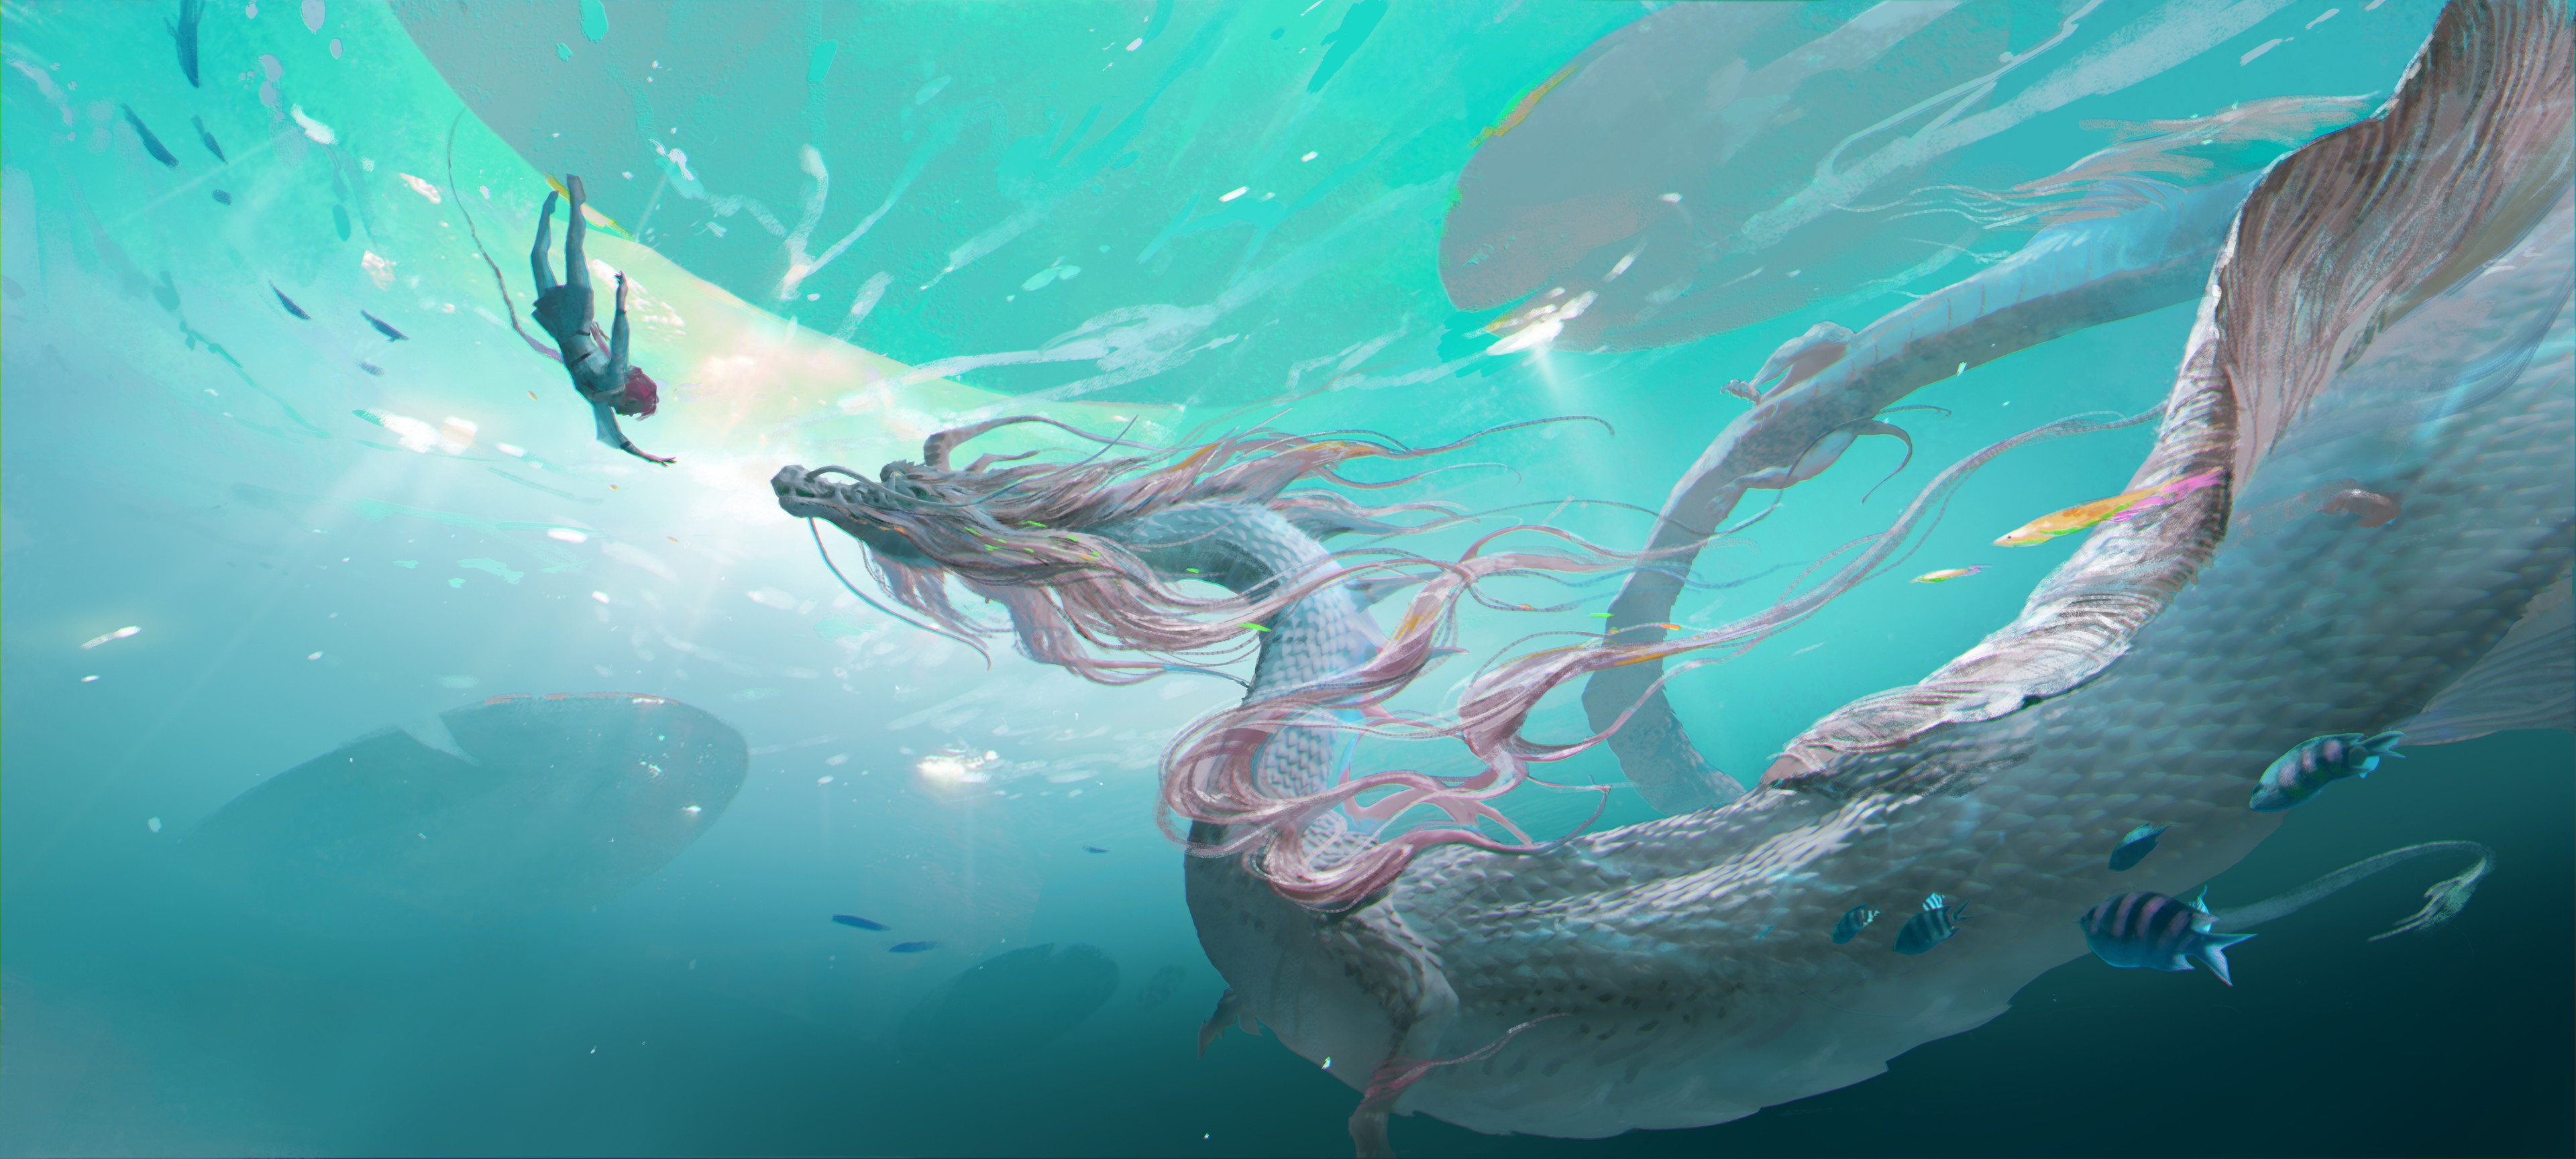 General 3840x1728 underwater Chinese dragon Tea Me creature water in water dragon fish animals artwork digital art